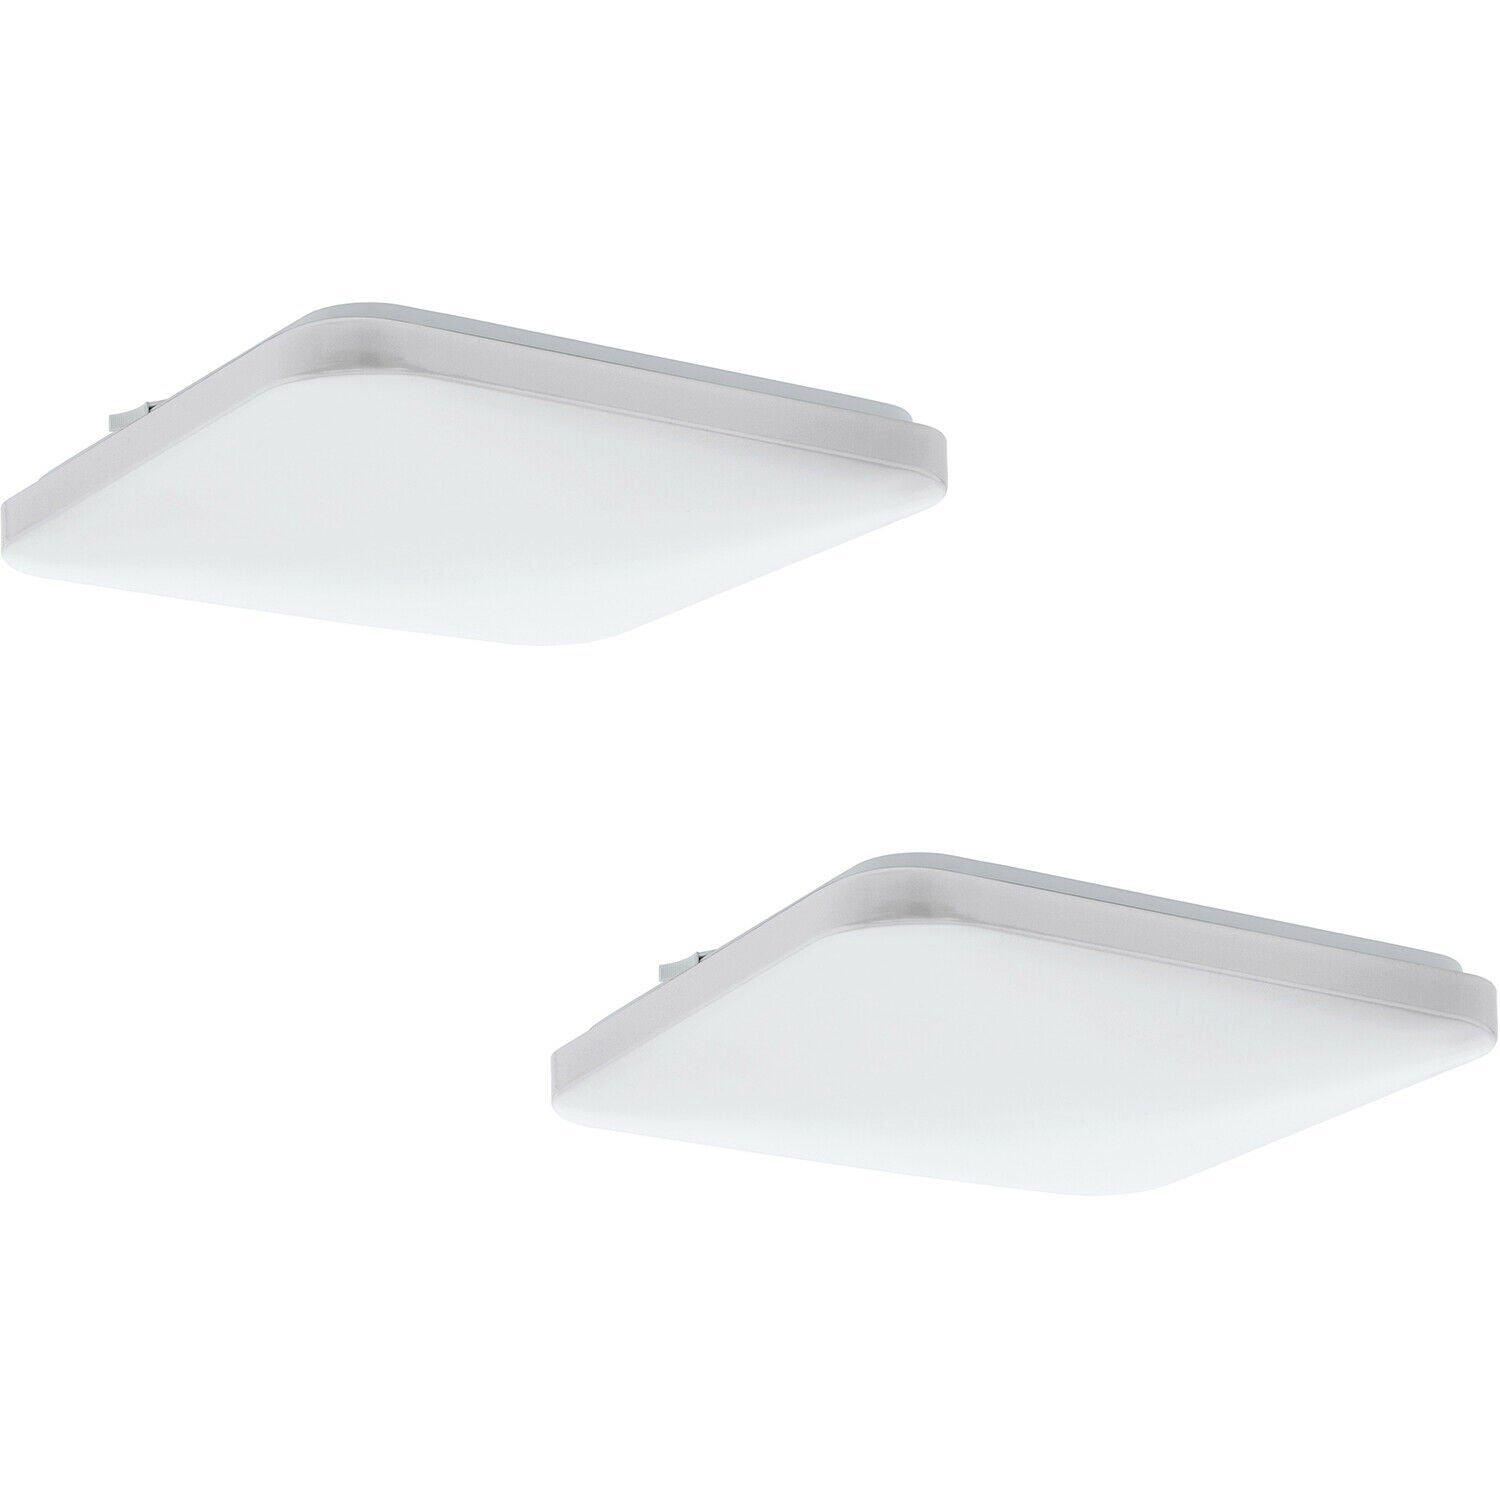 2 PACK Wall Flush Ceiling Light Colour White Shade Square White Plastic LED